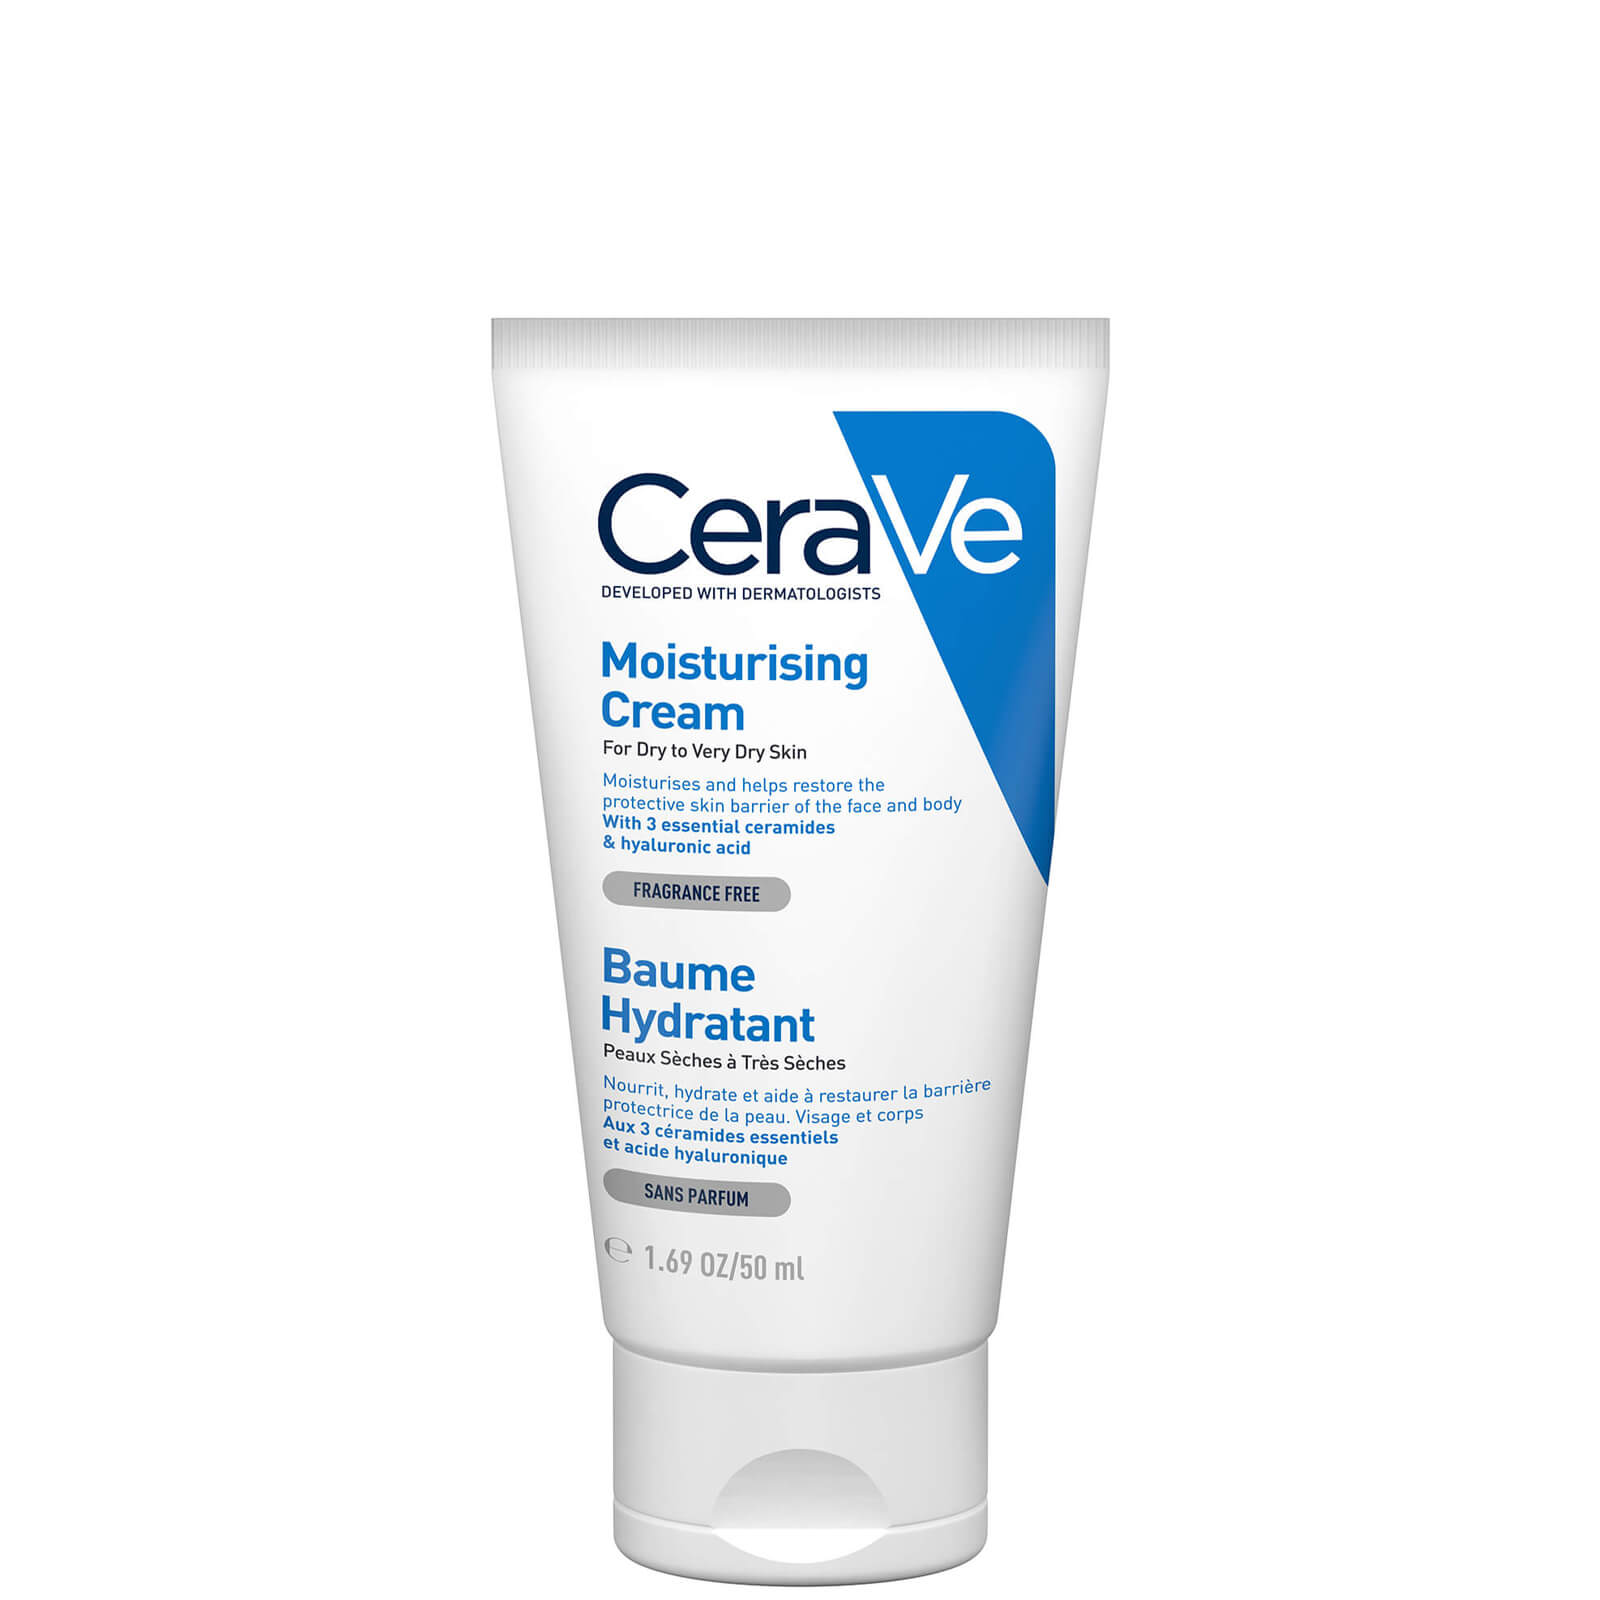 Crema hidratante de CeraVe 50 ml